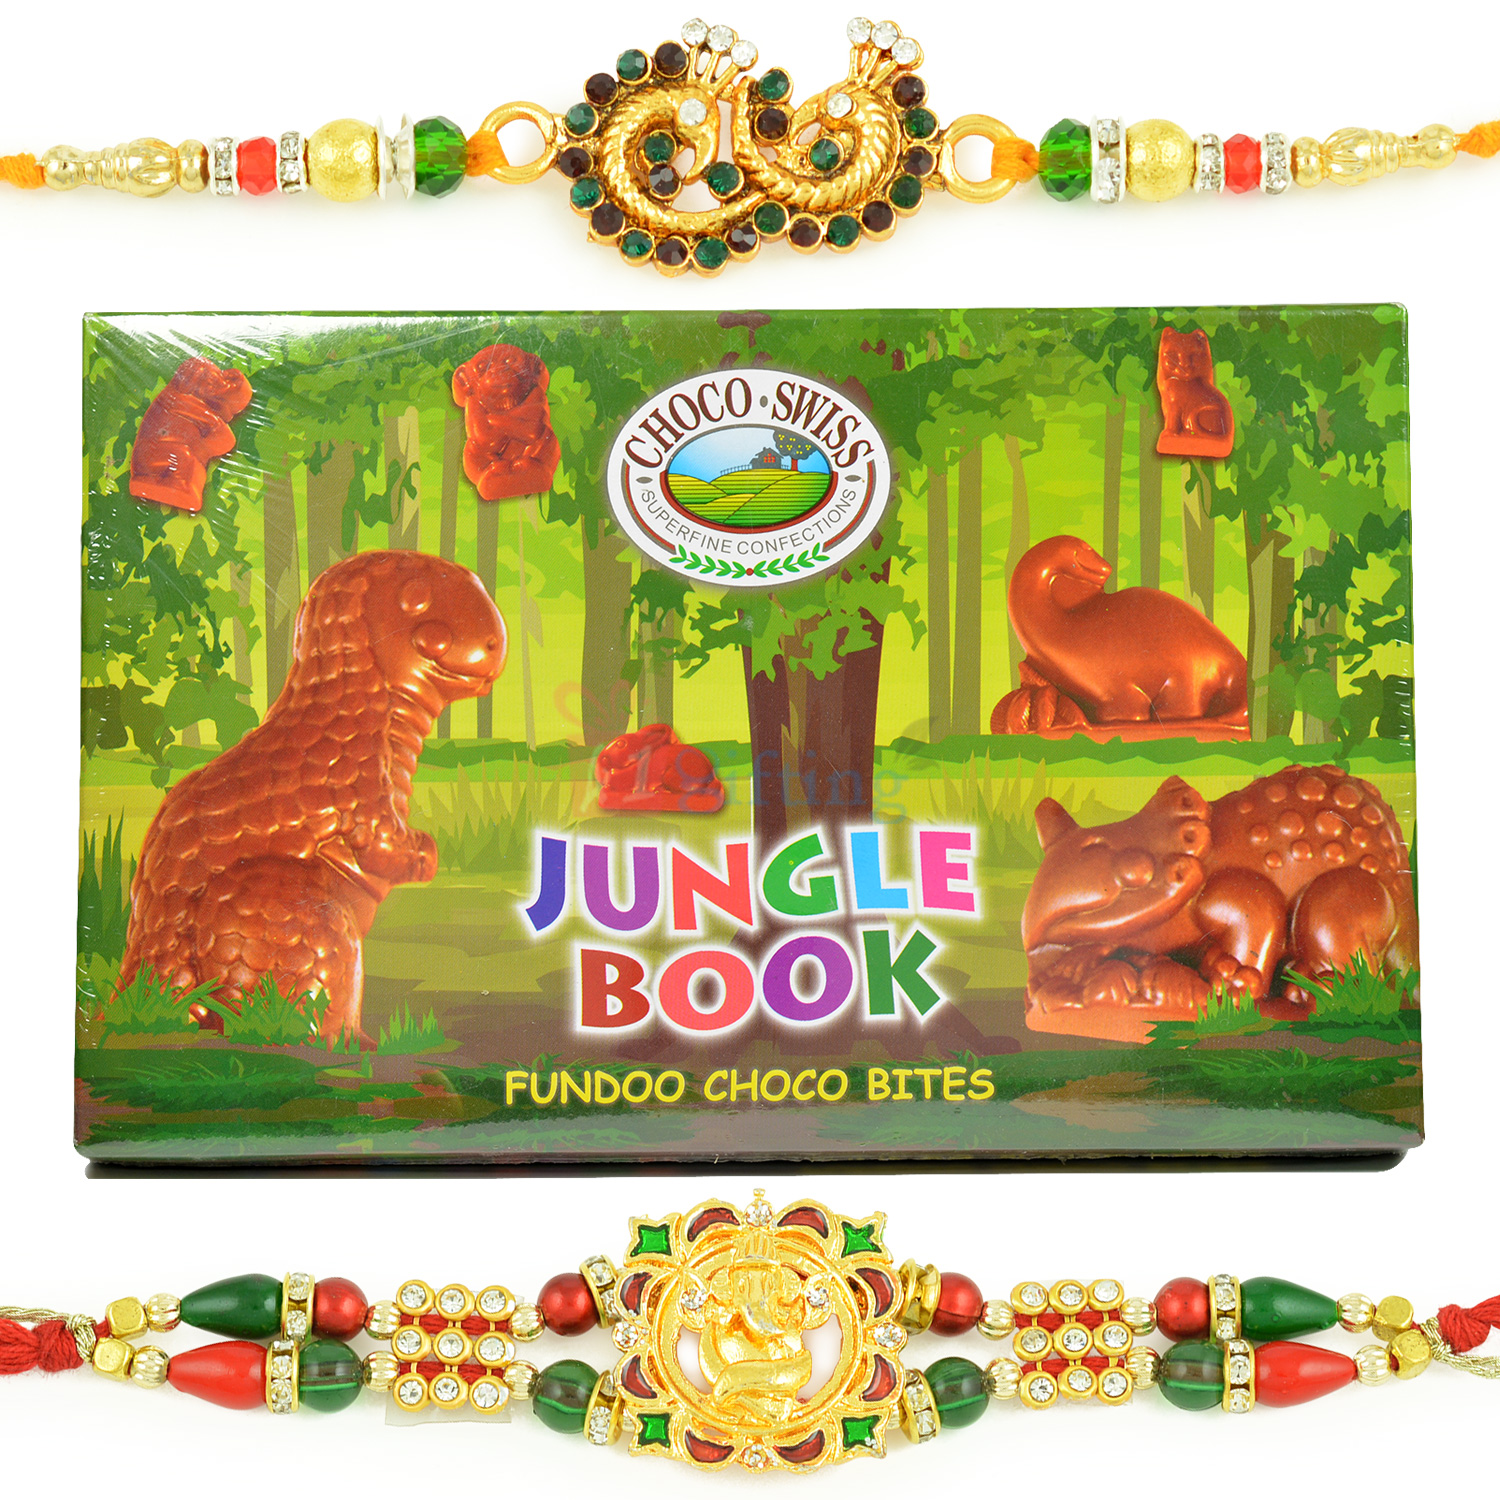 Jungle Book Fundoo Choco Bites with 2 Exclusive Rakhis